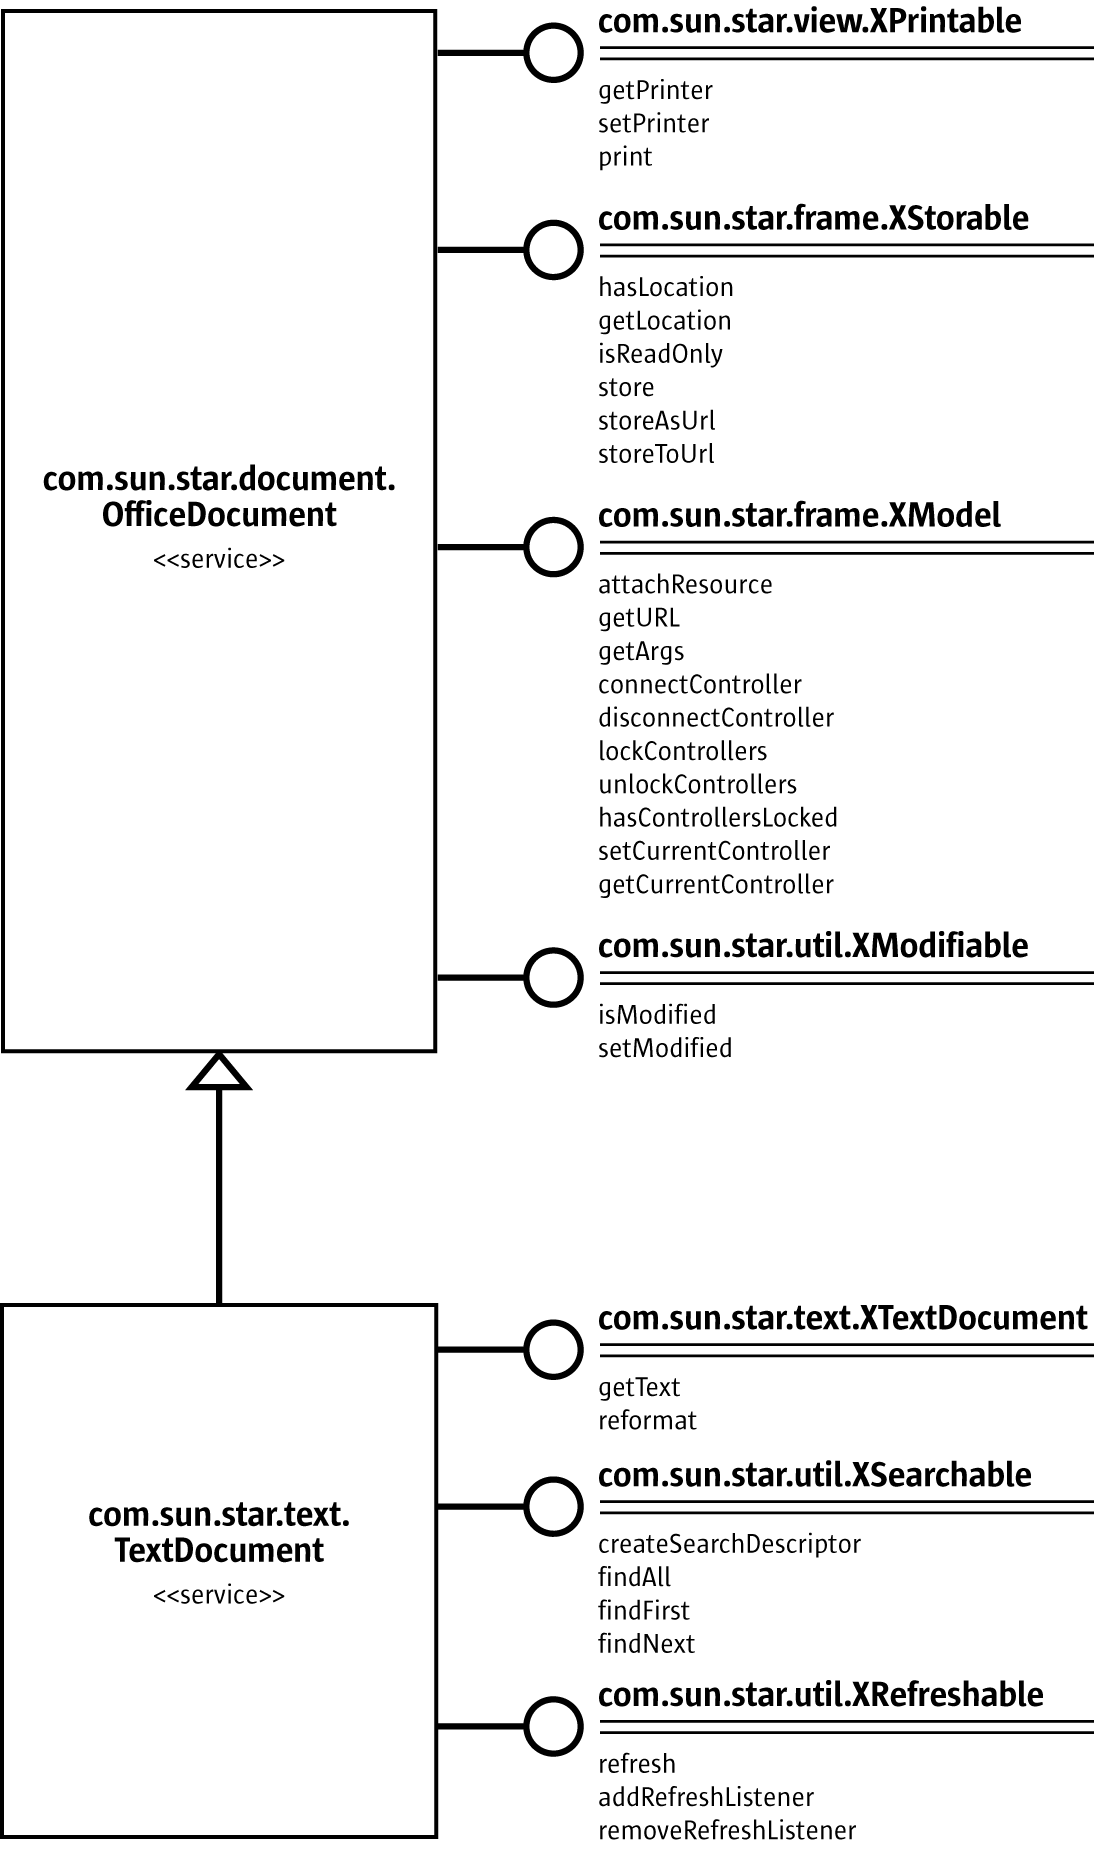 UML diagram showing the com.sun.star.text.TextDocument service